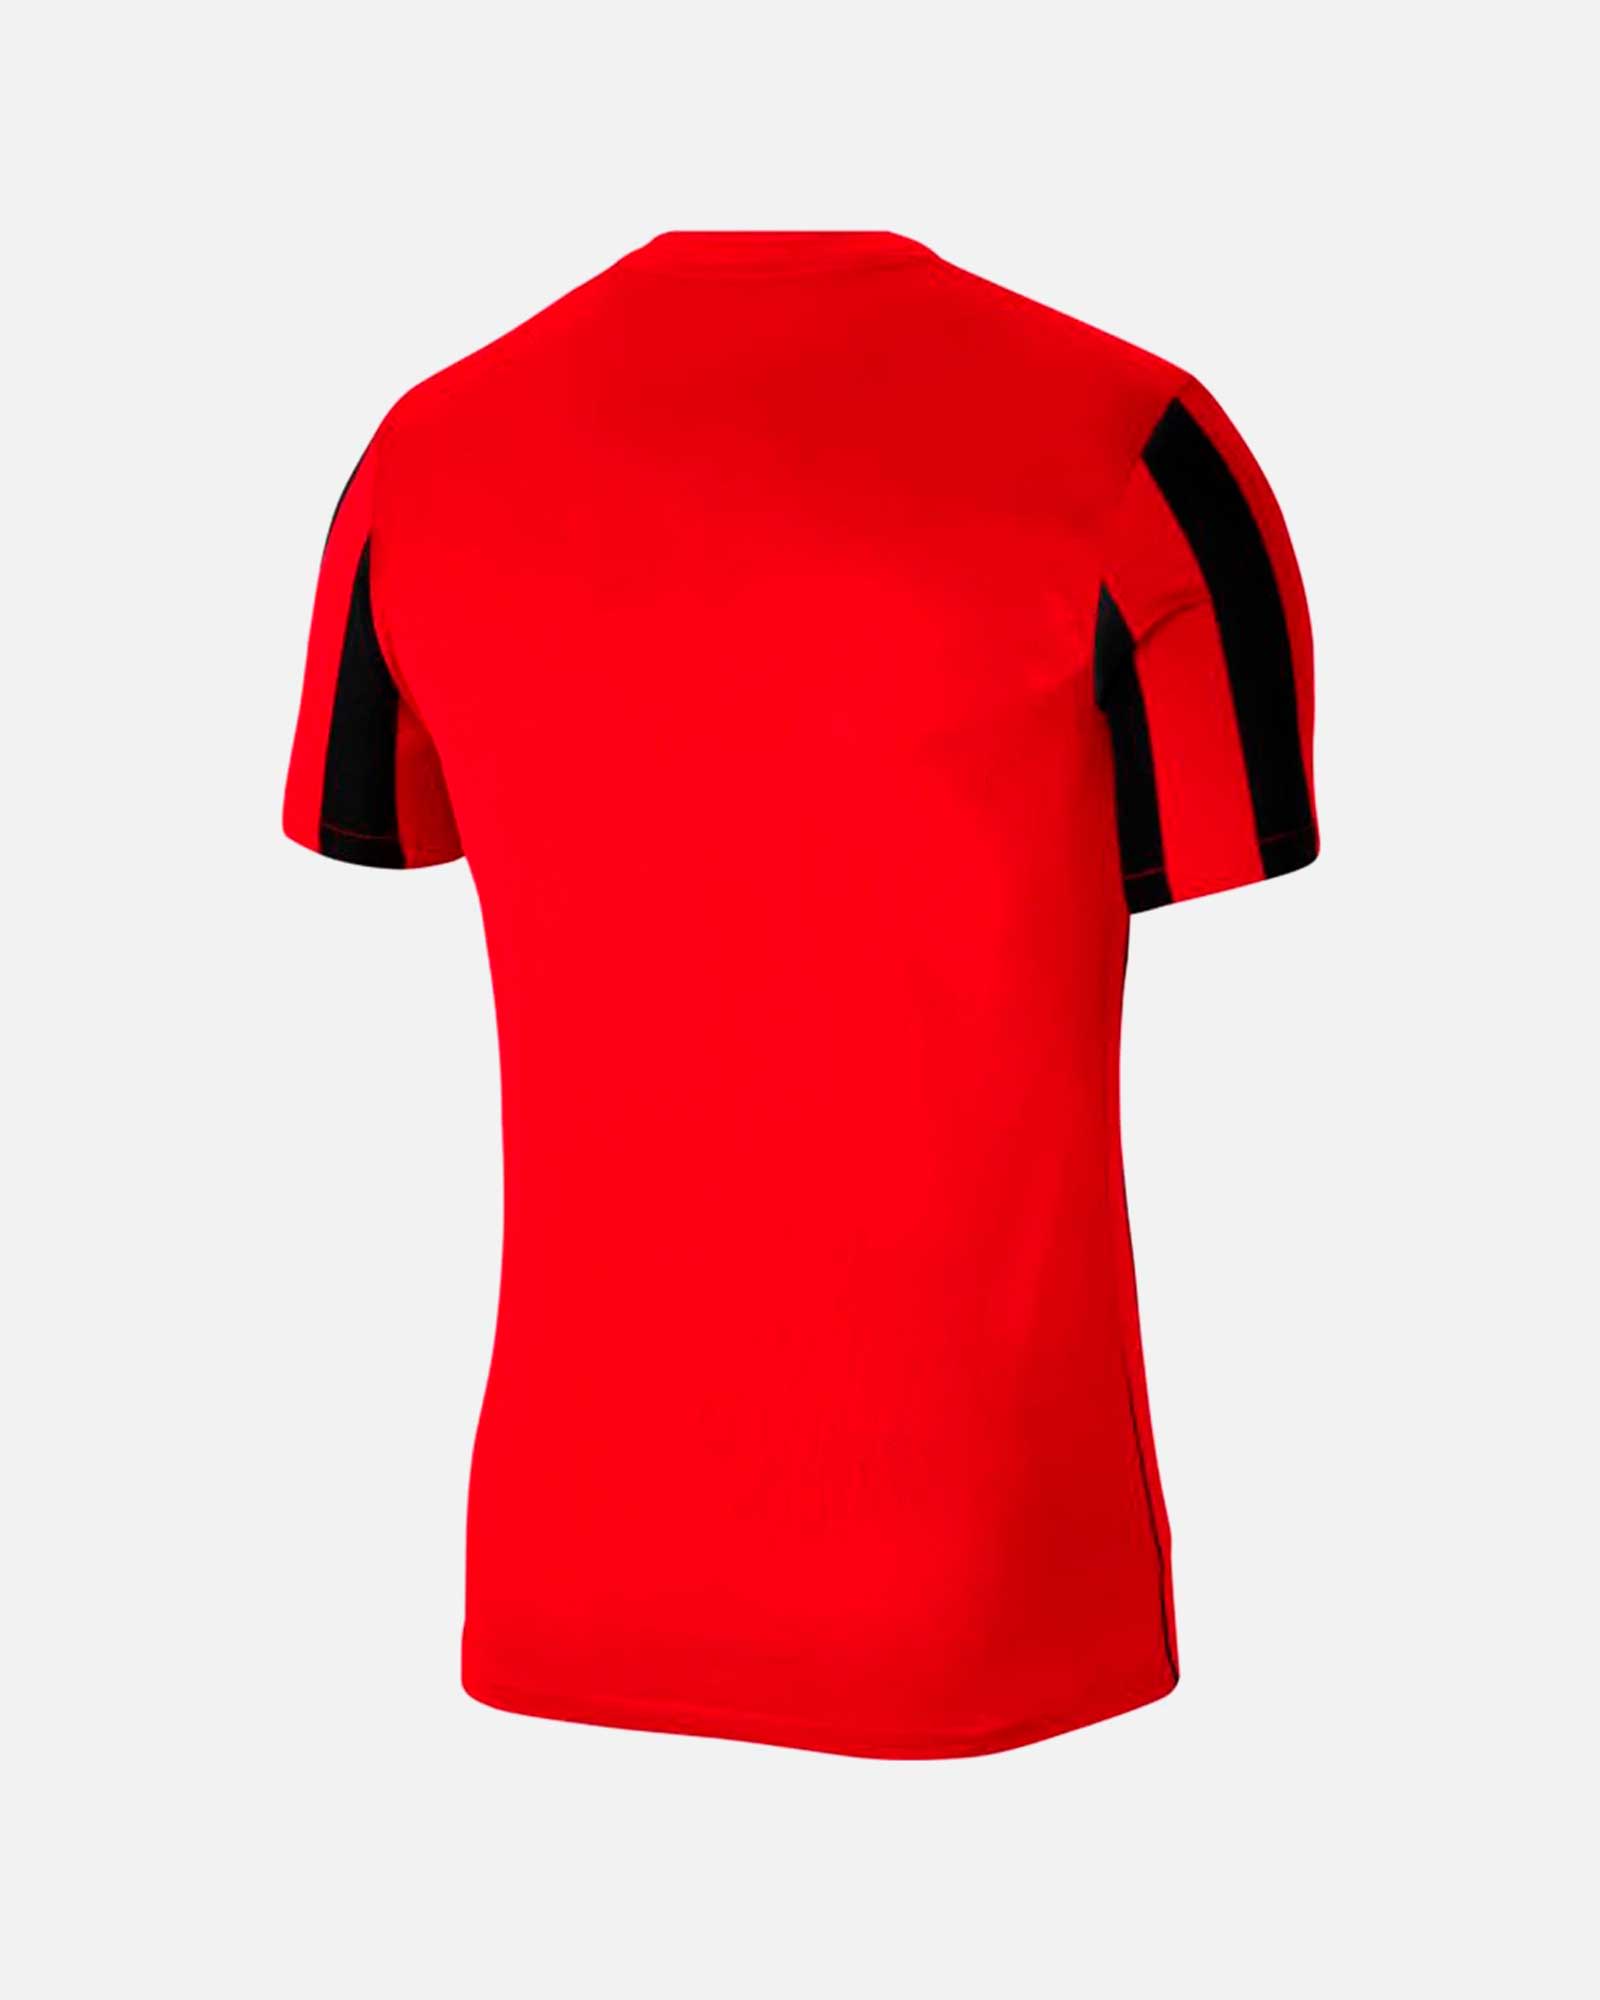 Camiseta Nike Striped IV - Fútbol Factory